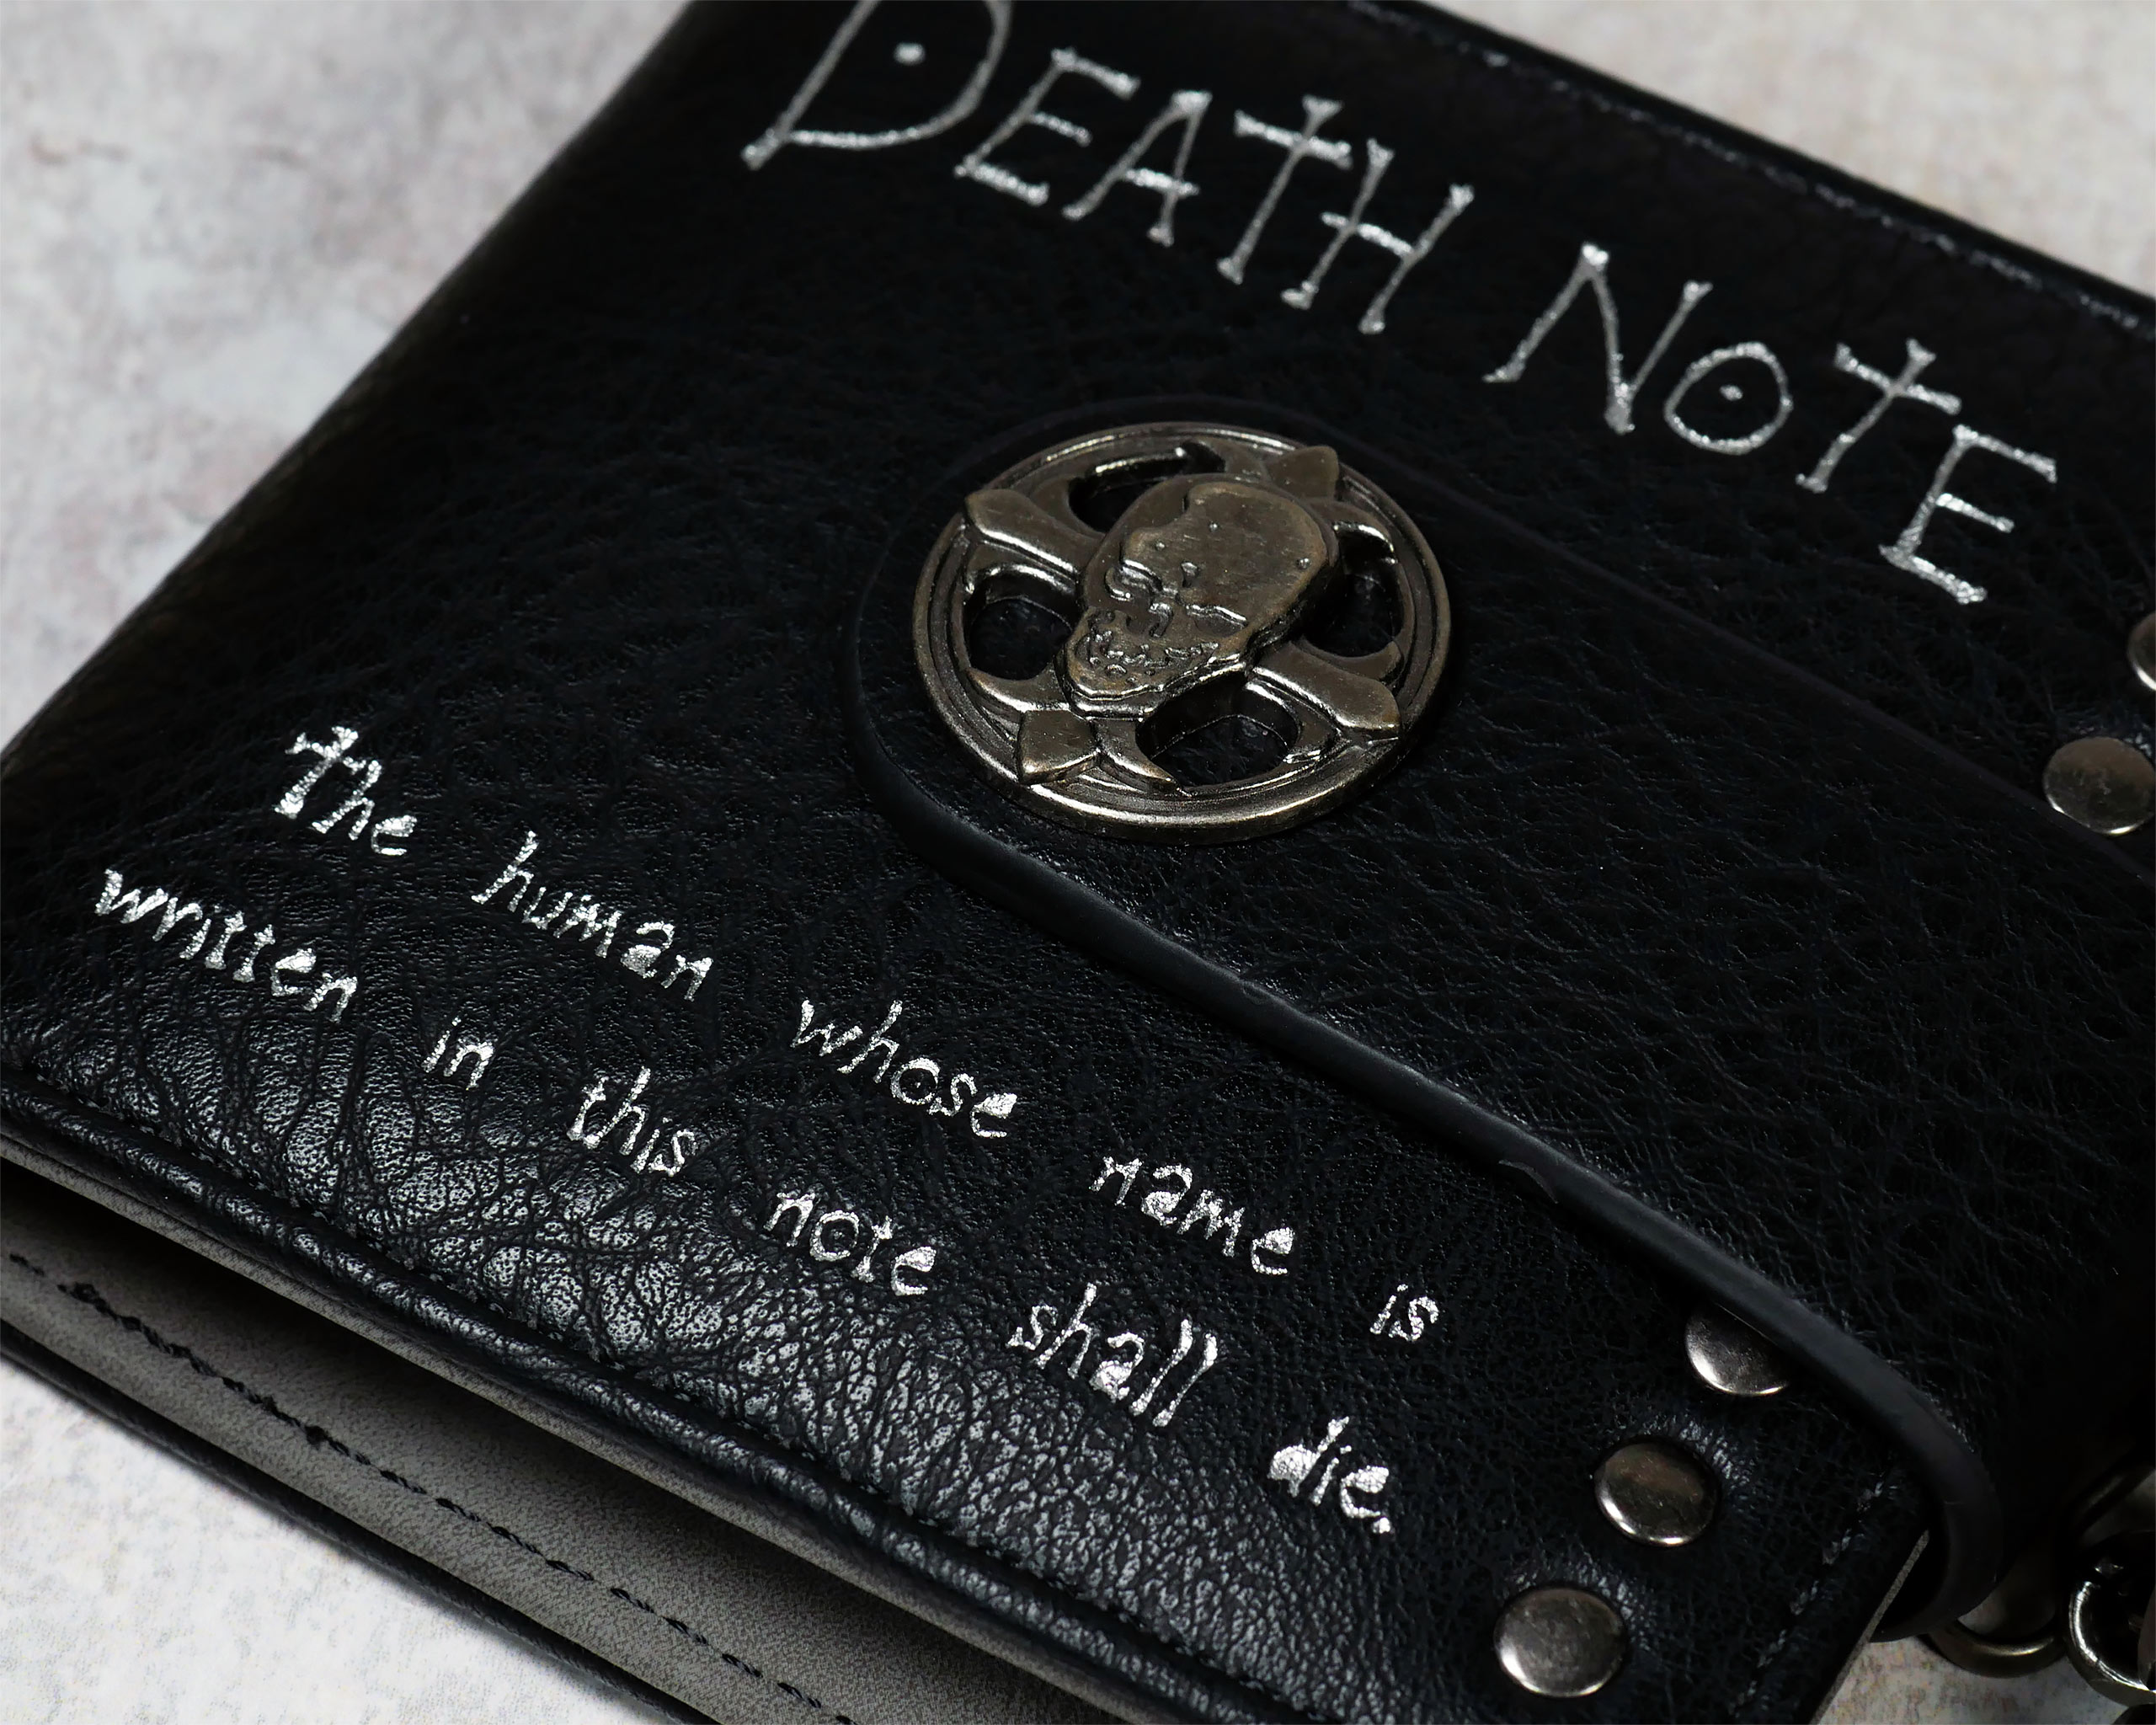 Death Note - Ryuk Premium Portemonnee